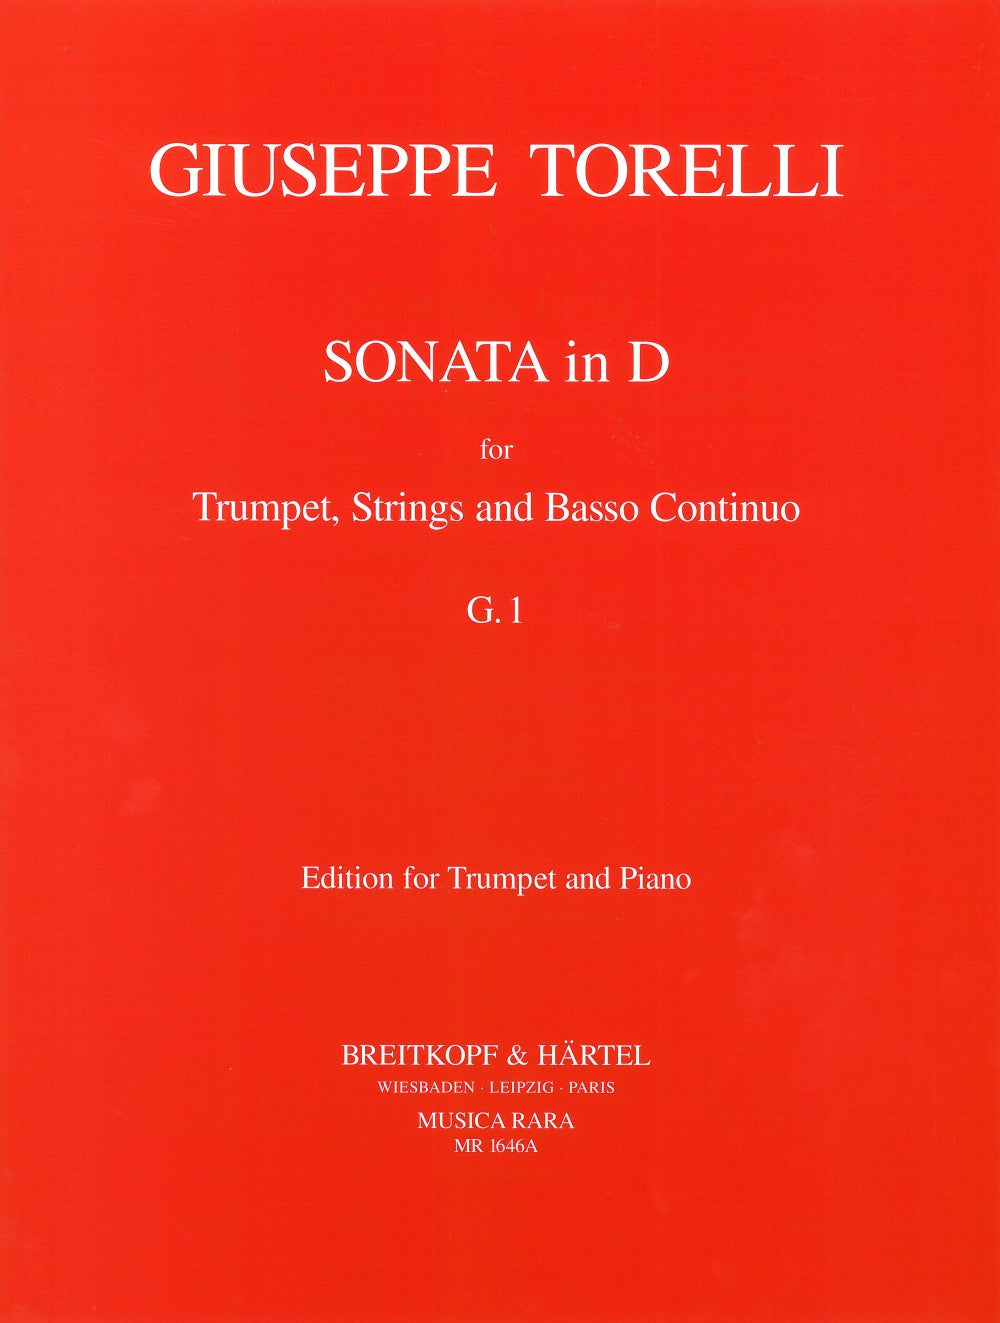 Torelli: Trumpet Sonata in D Major, G.1